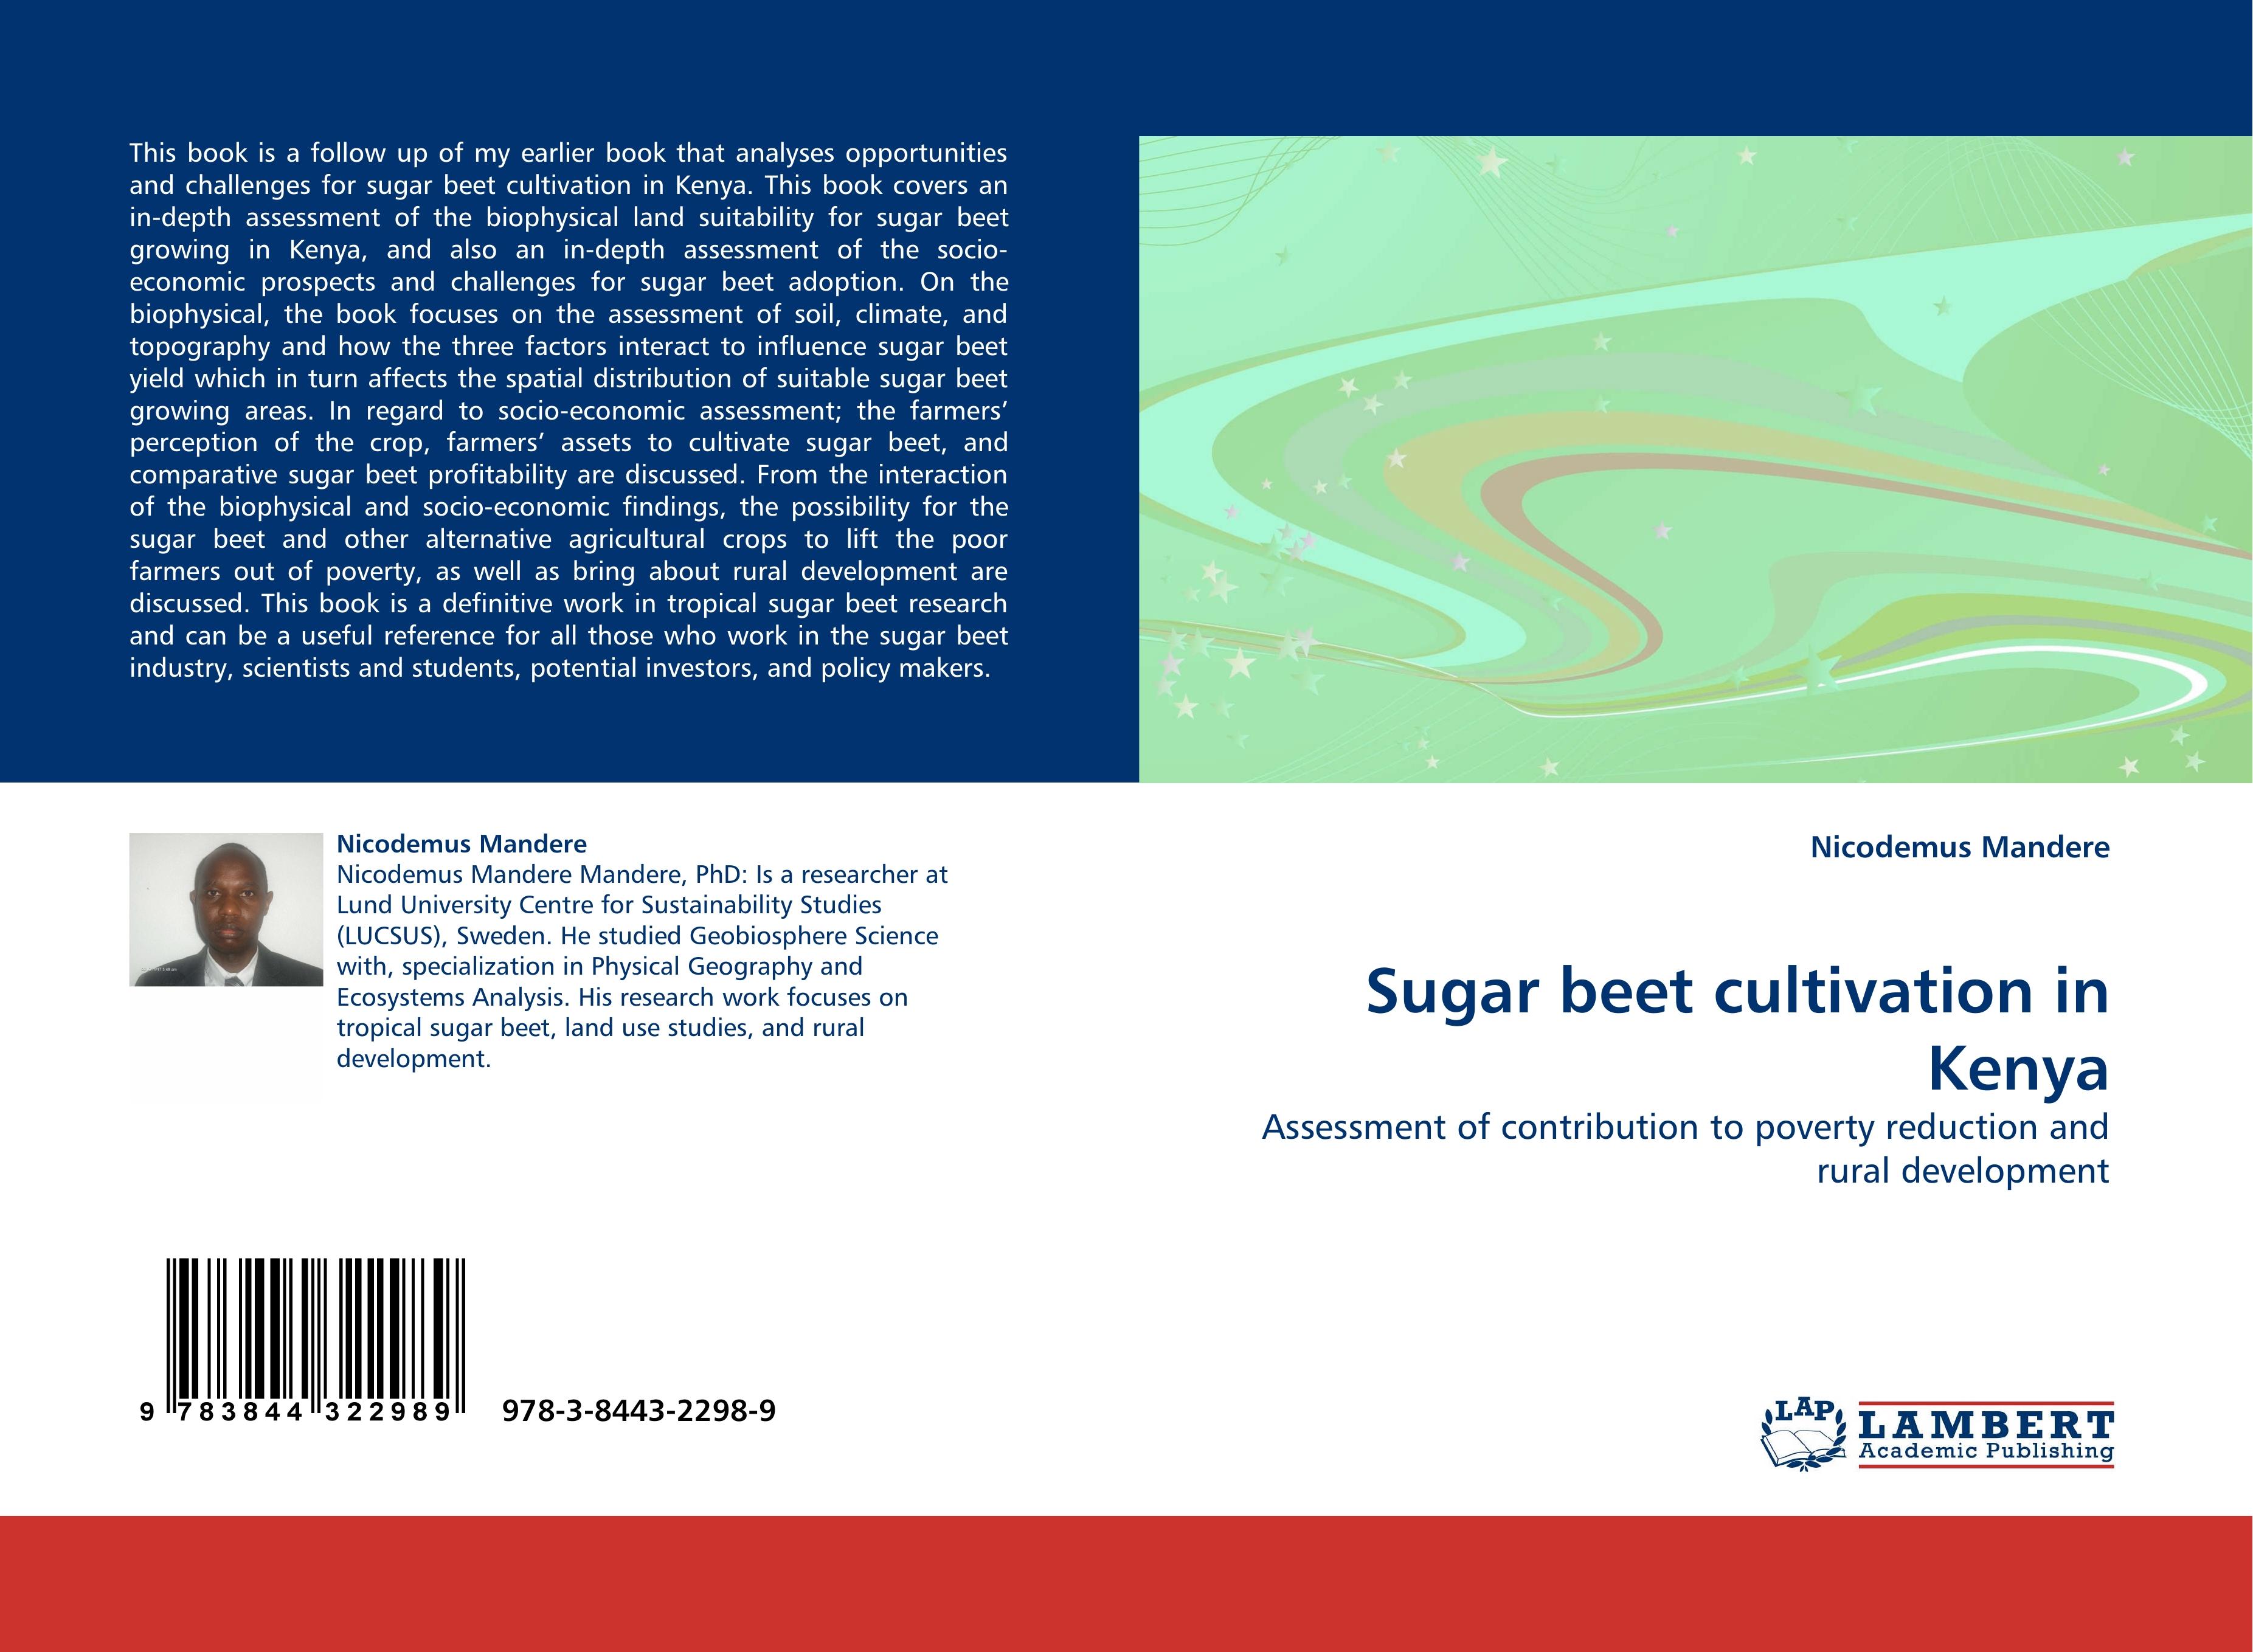 Sugar beet cultivation in Kenya / Assessment of contribution to poverty reduction and rural development / Nicodemus Mandere / Taschenbuch / Paperback / 60 S. / Englisch / 2011 / EAN 9783844322989 - Mandere, Nicodemus